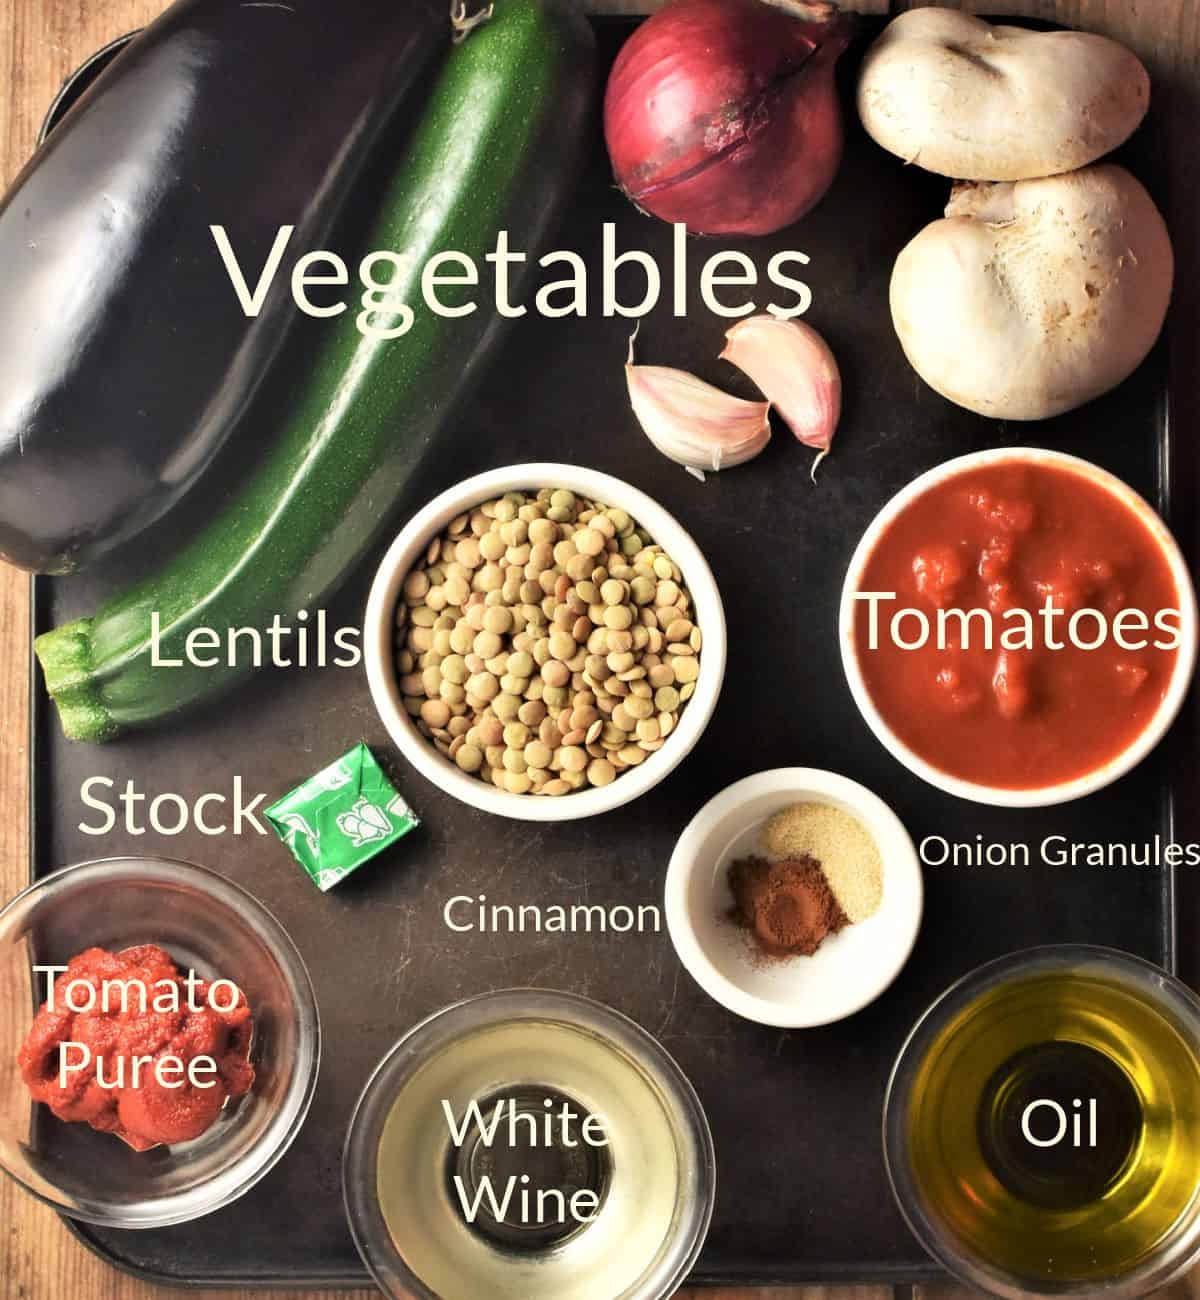 Ingredients for making vegetarian moussaka filling in individual dishes.